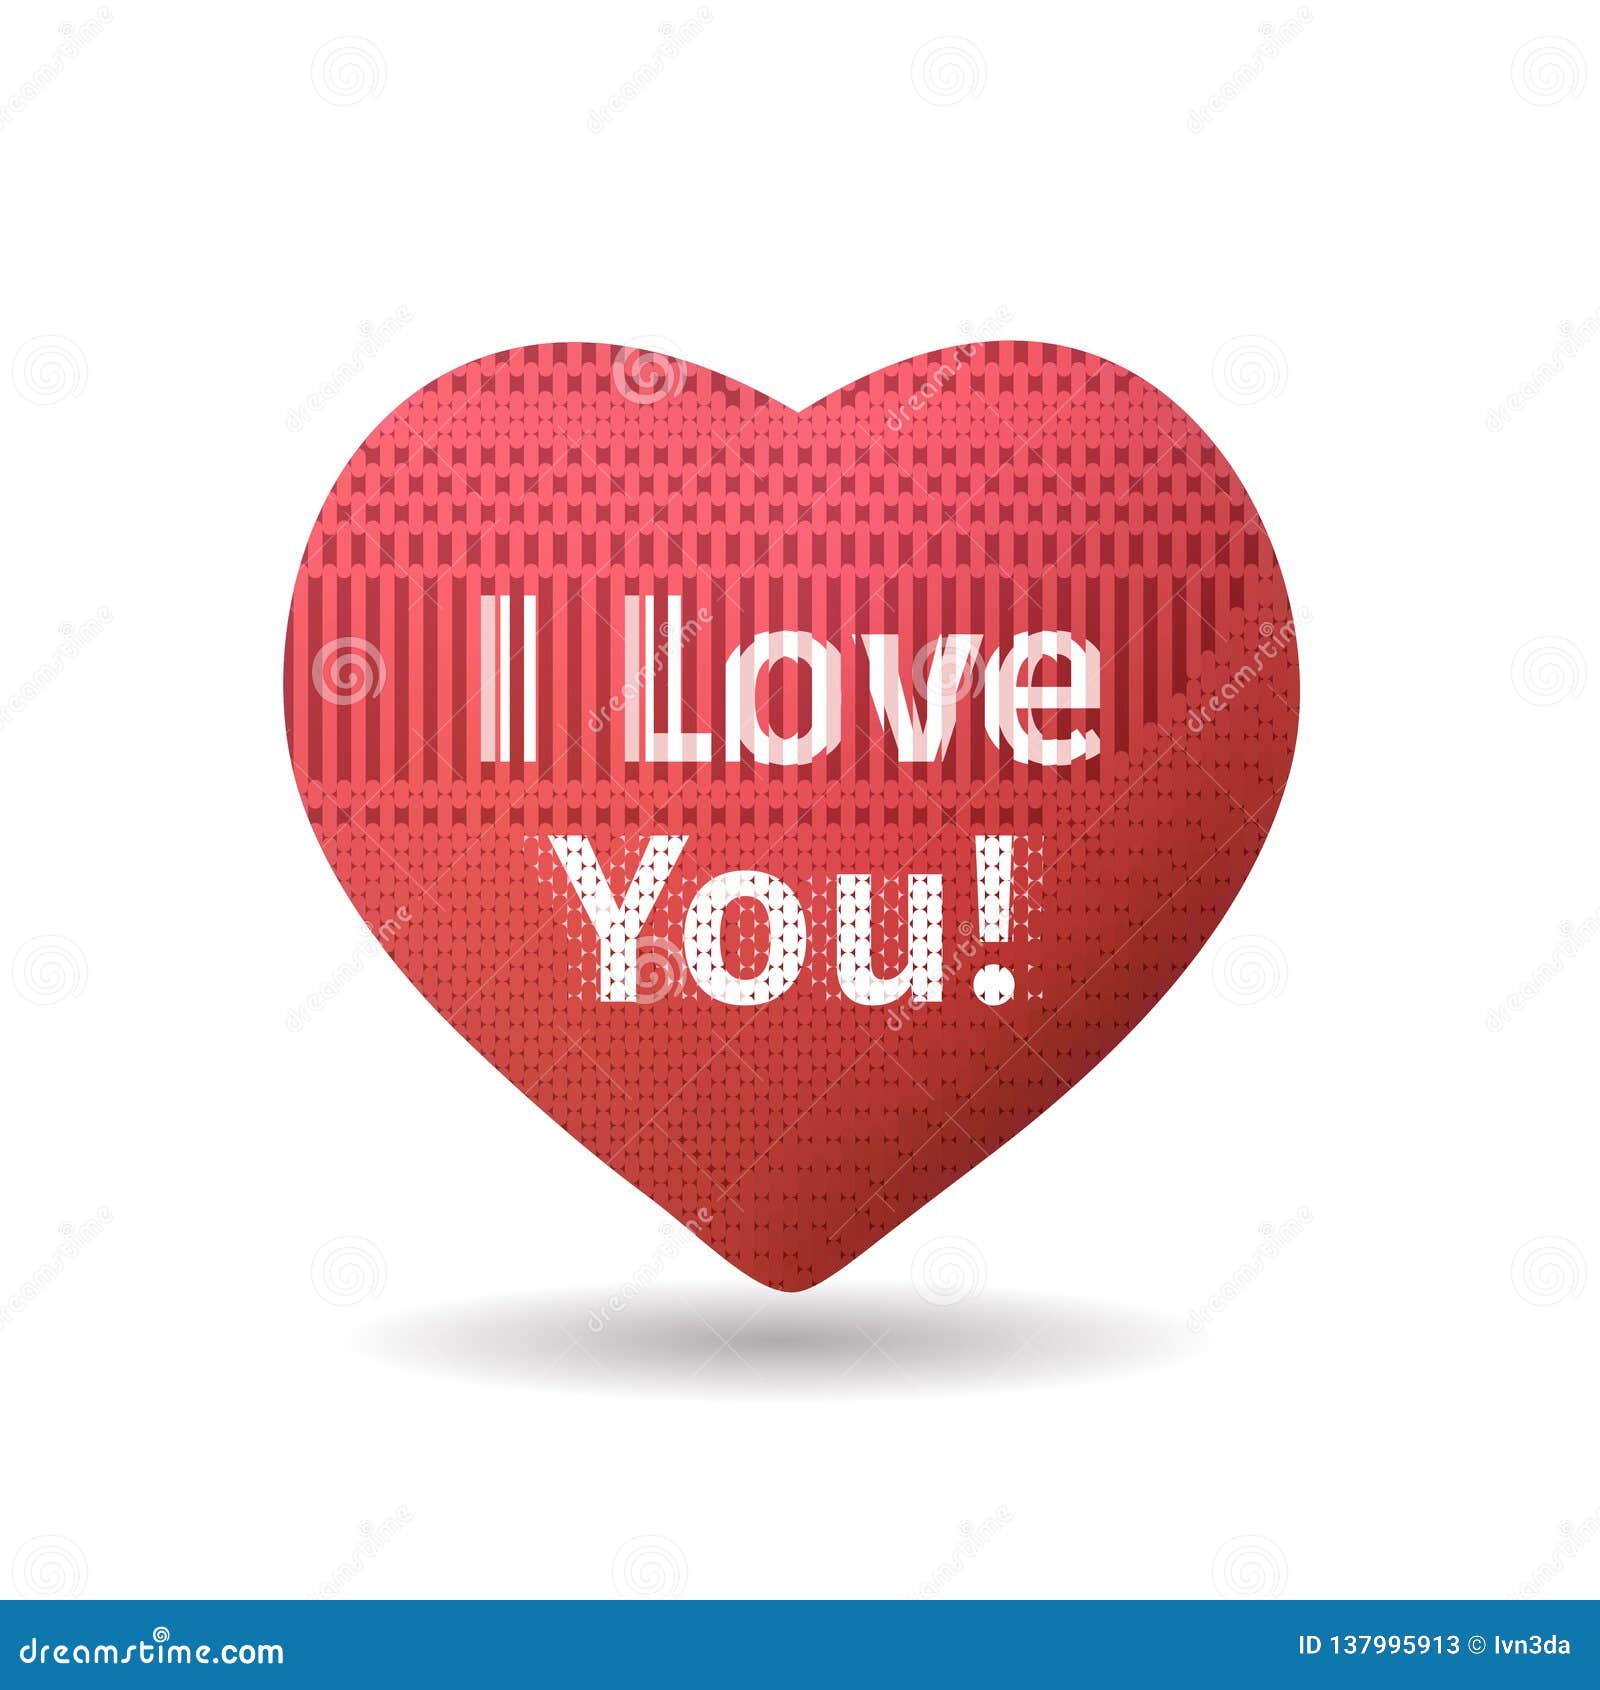 https://thumbs.dreamstime.com/z/romantic-declaration-love-i-you-inscription-heart-knitted-pattern-137995913.jpg